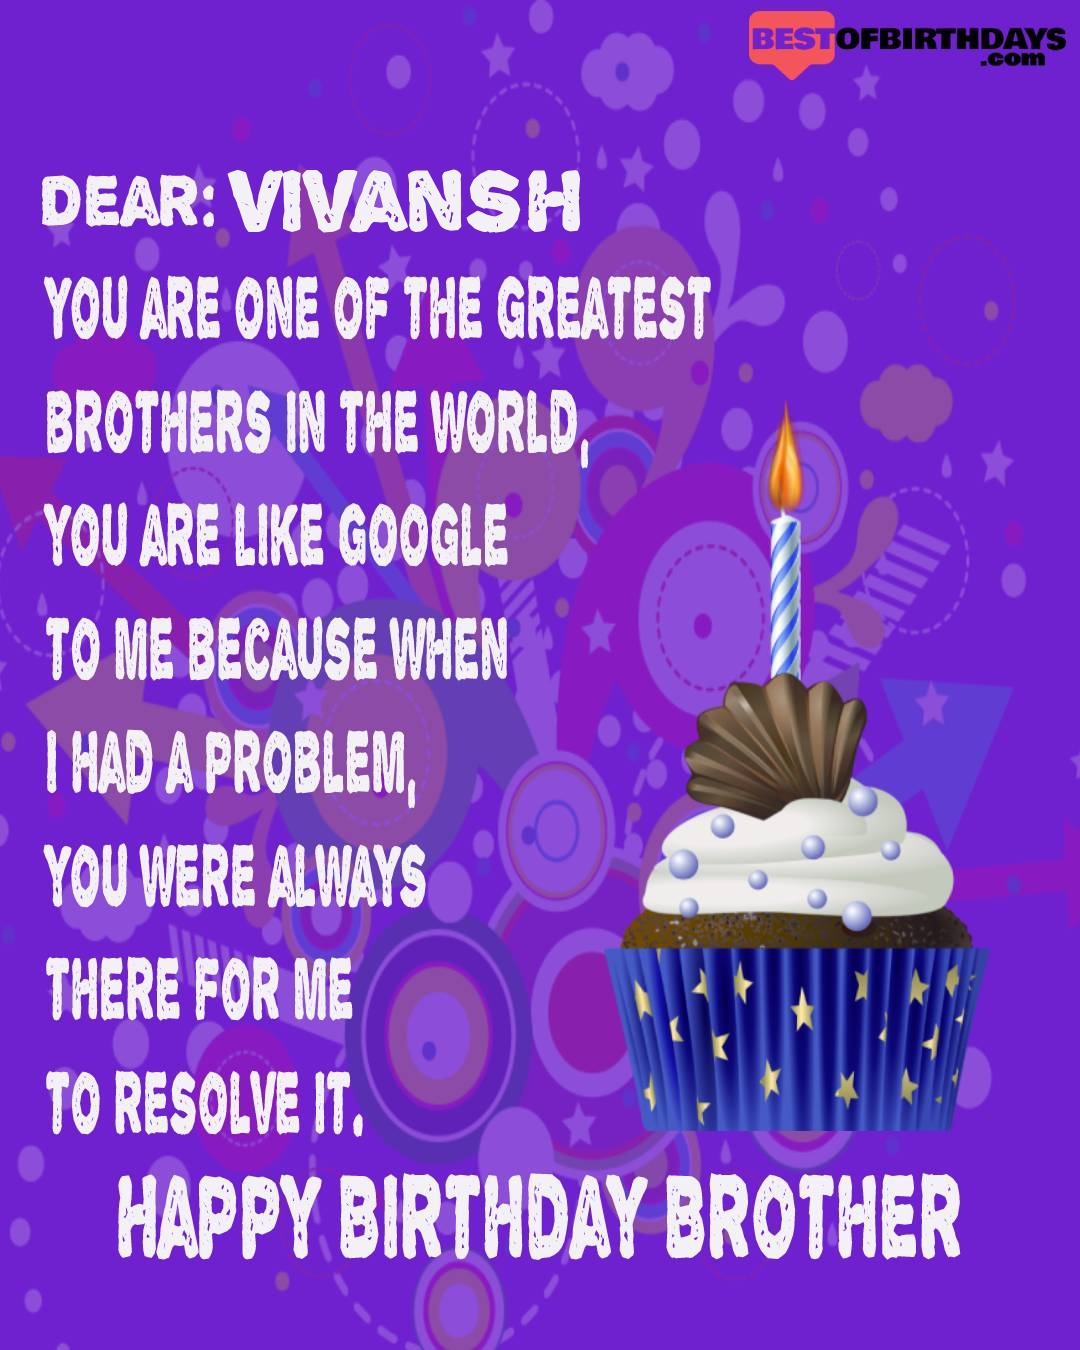 Happy birthday vivansh bhai brother bro